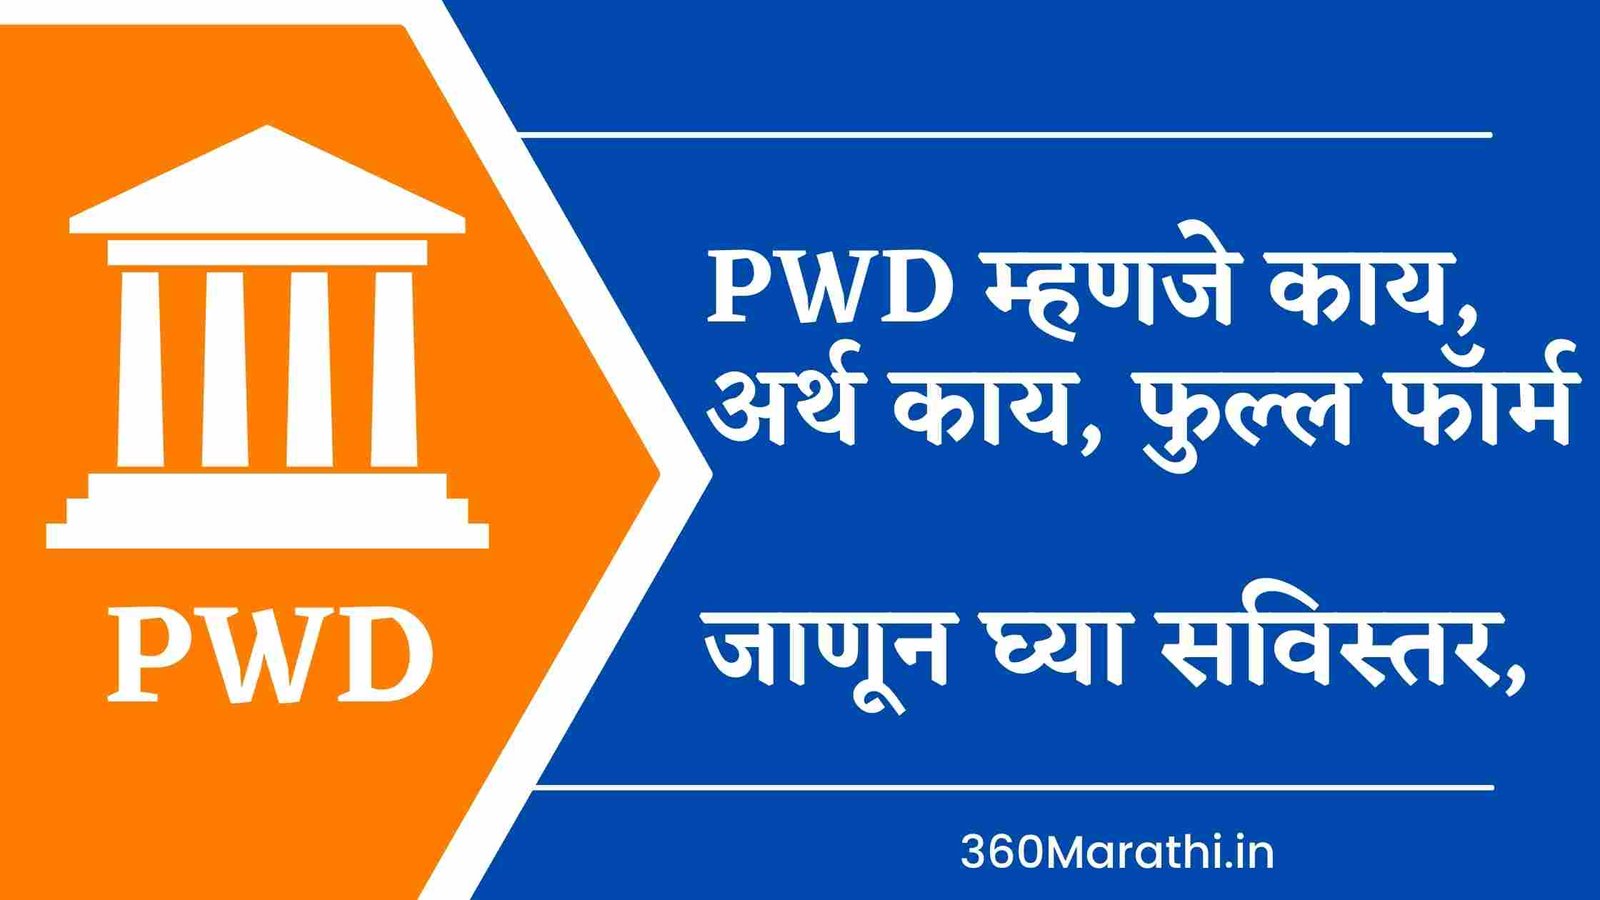 PWD Full Form In Marathi